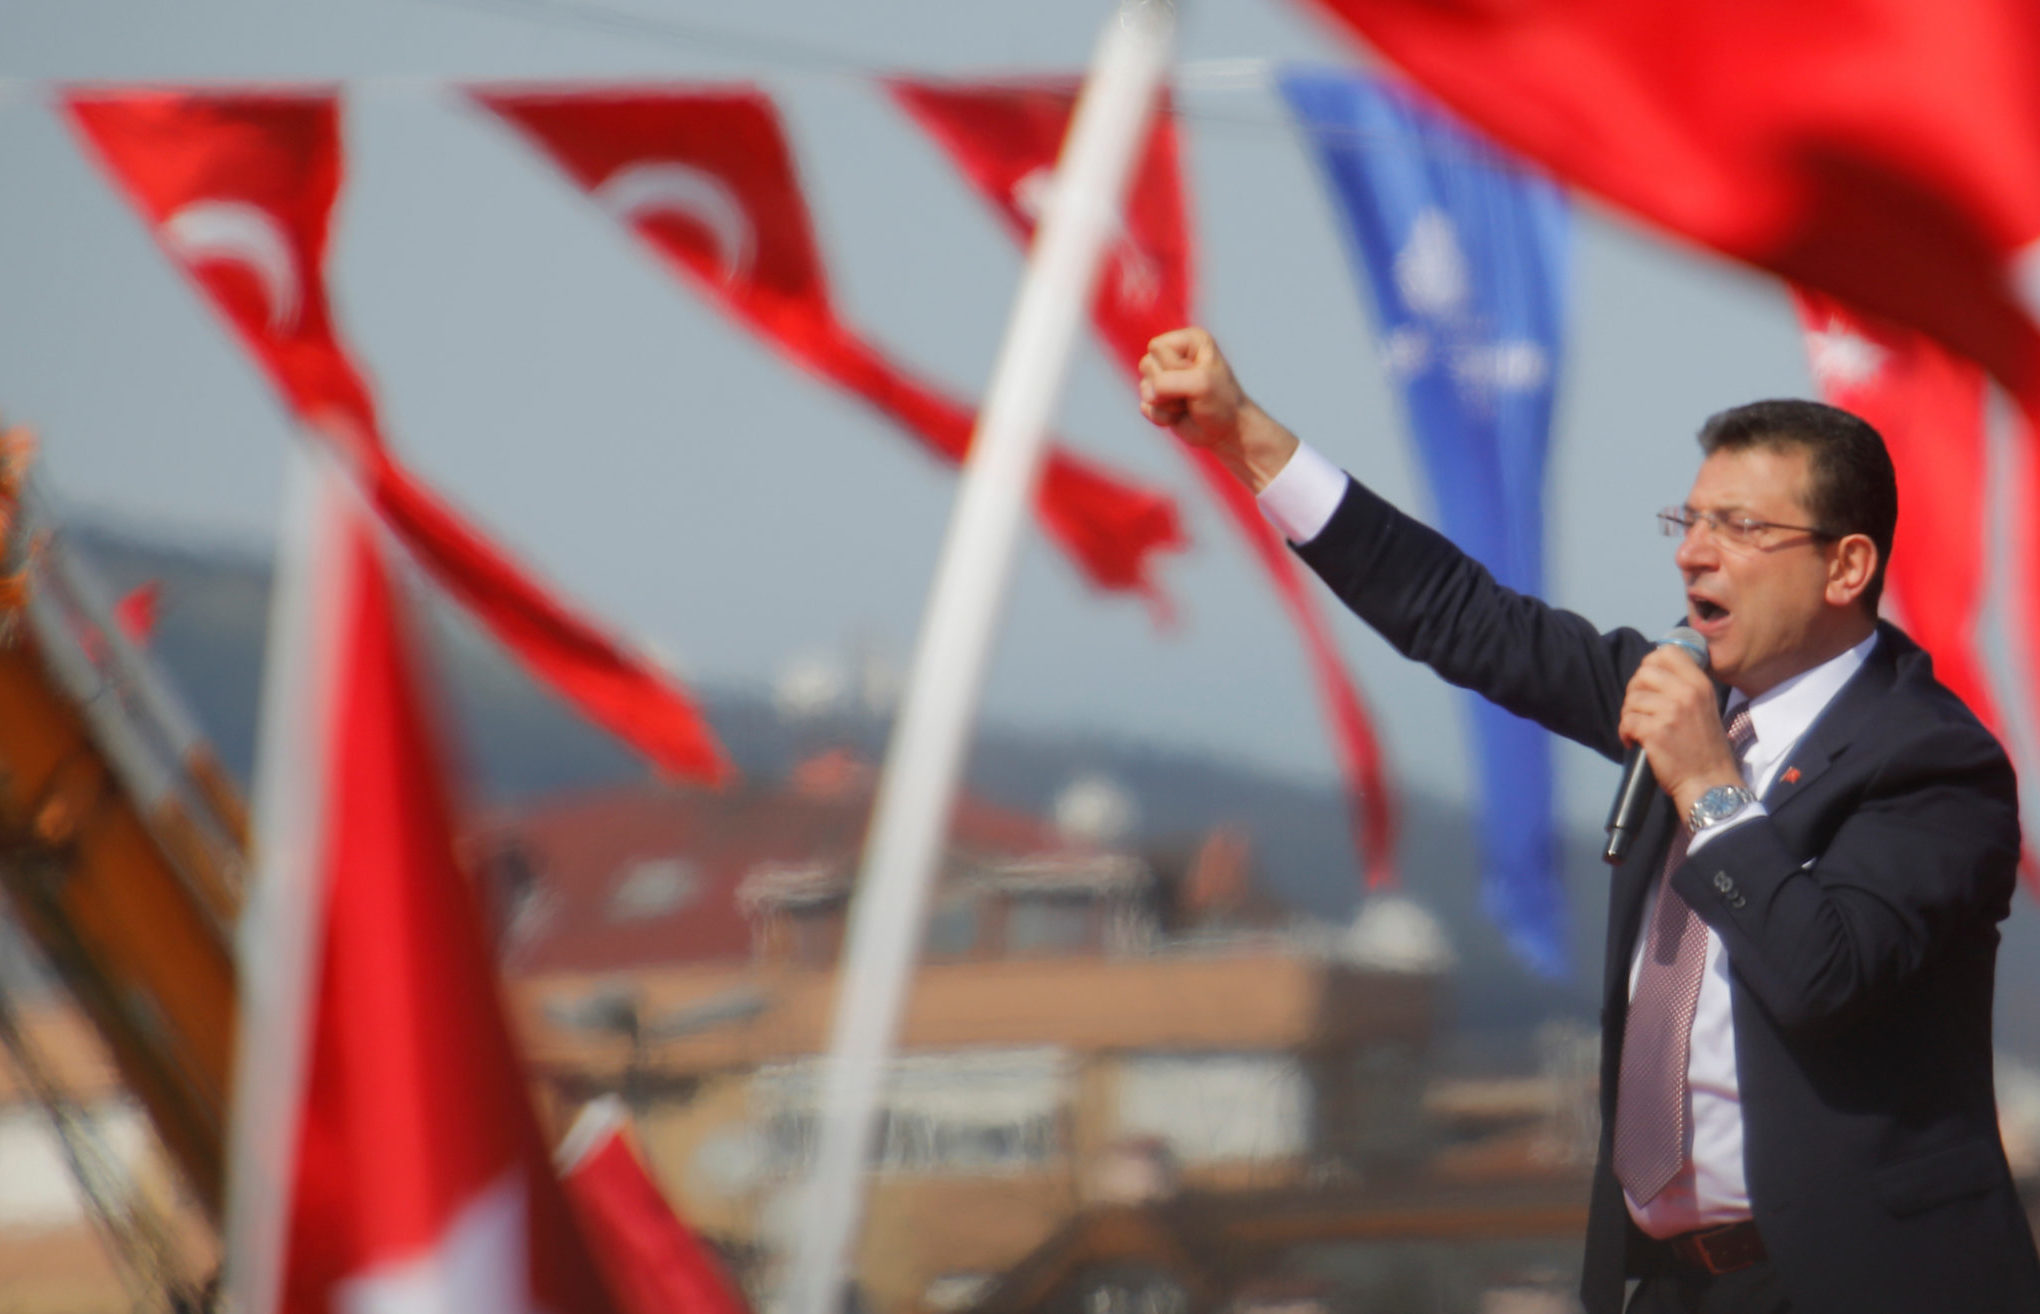 Turkey: Kurdish Mayors' Removal Violates Voters' Rights